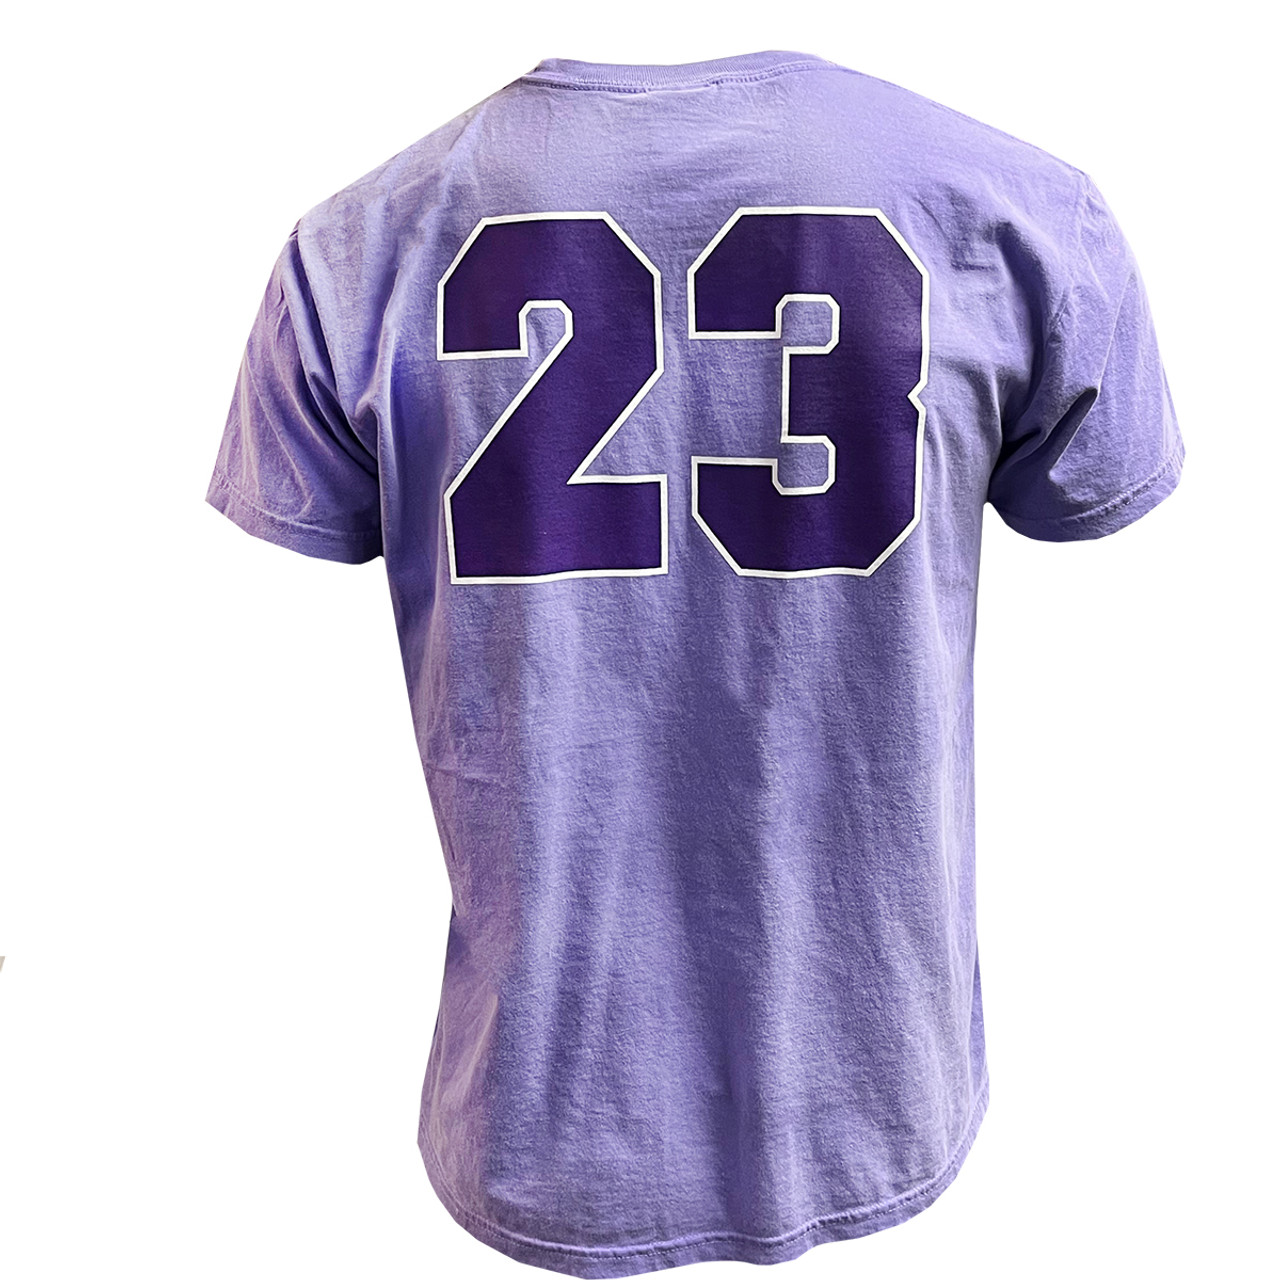 Men's Champion Purple ECU Pirates Football Jersey T-Shirt